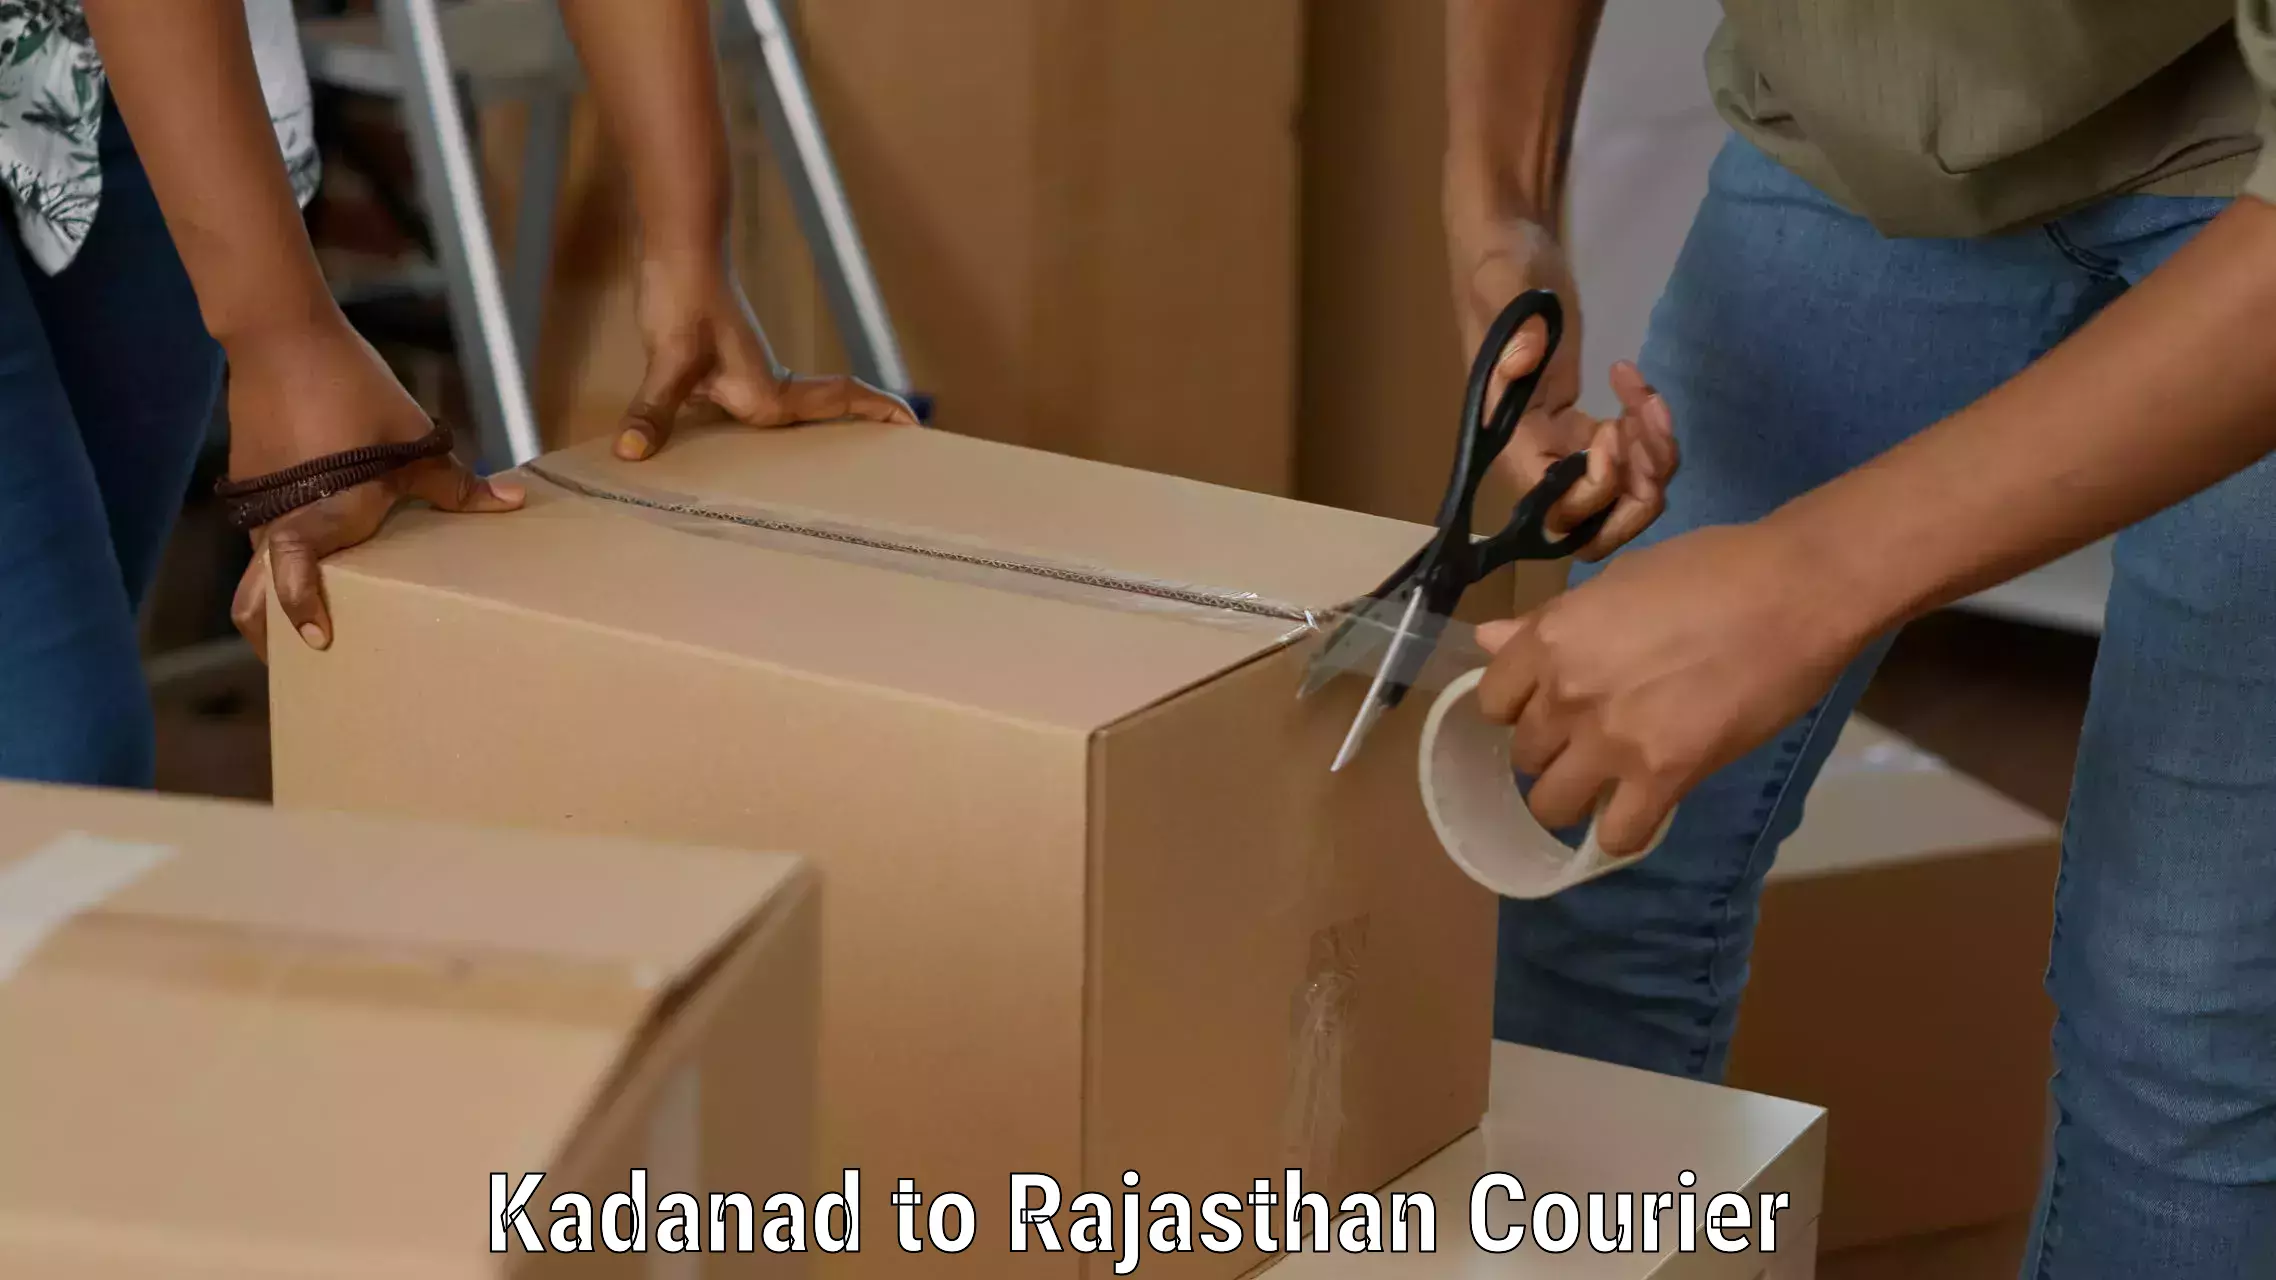 Professional courier handling Kadanad to Rajasthan